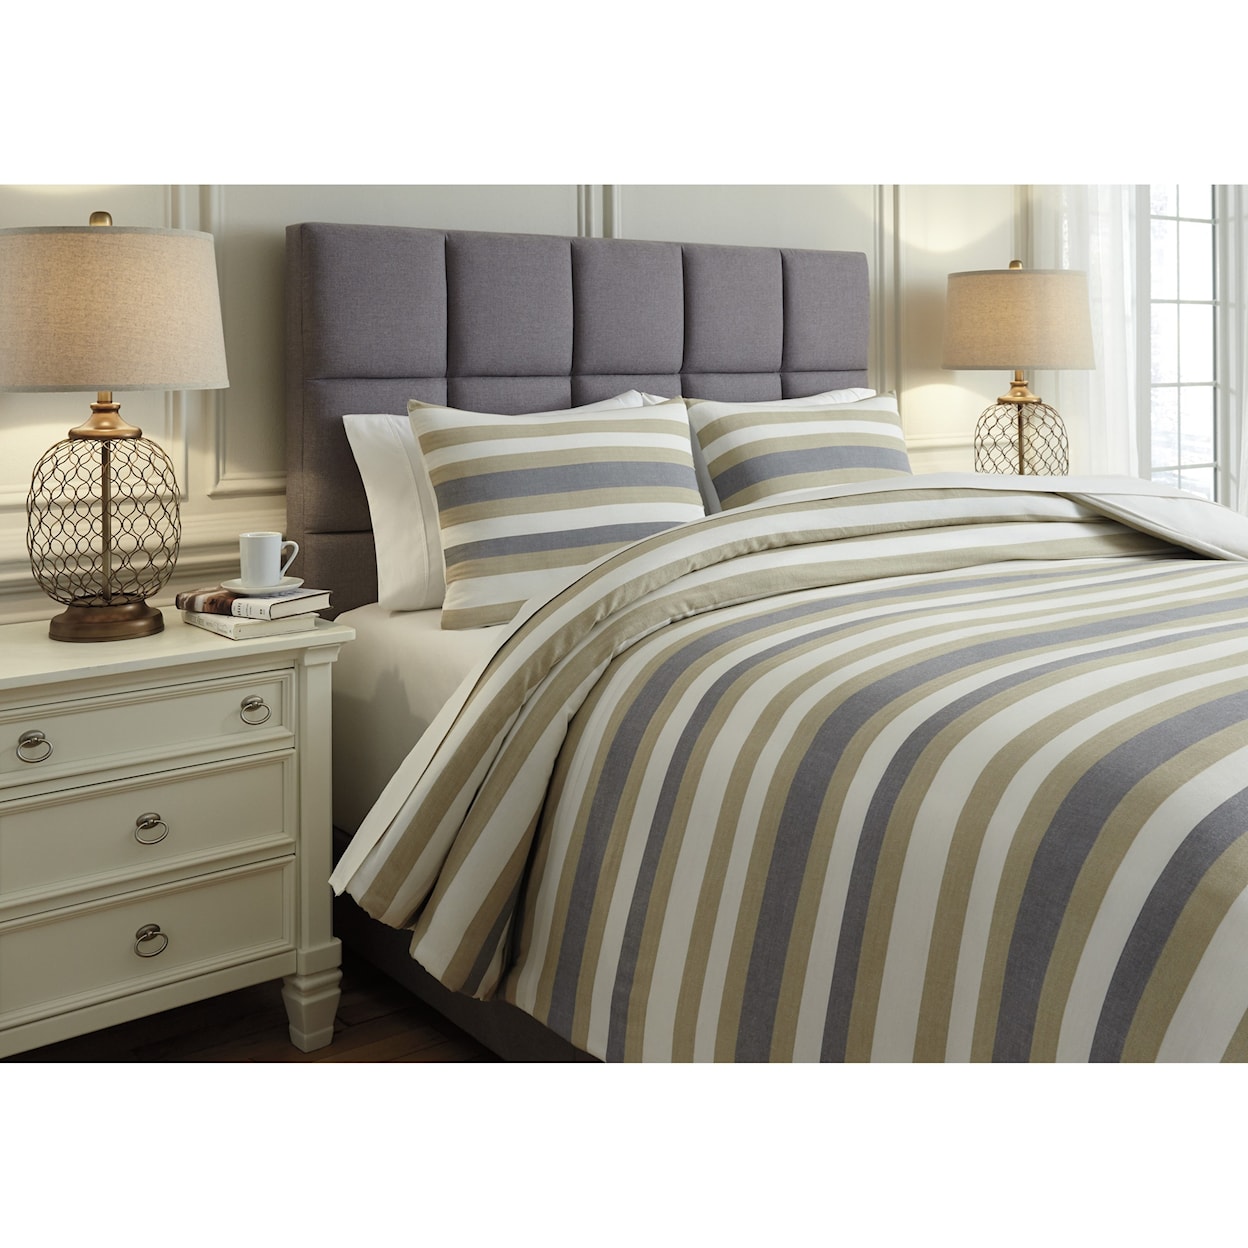 Ashley Furniture Signature Design Bedding Sets King Isaiah Gray/Tan Comforter Set